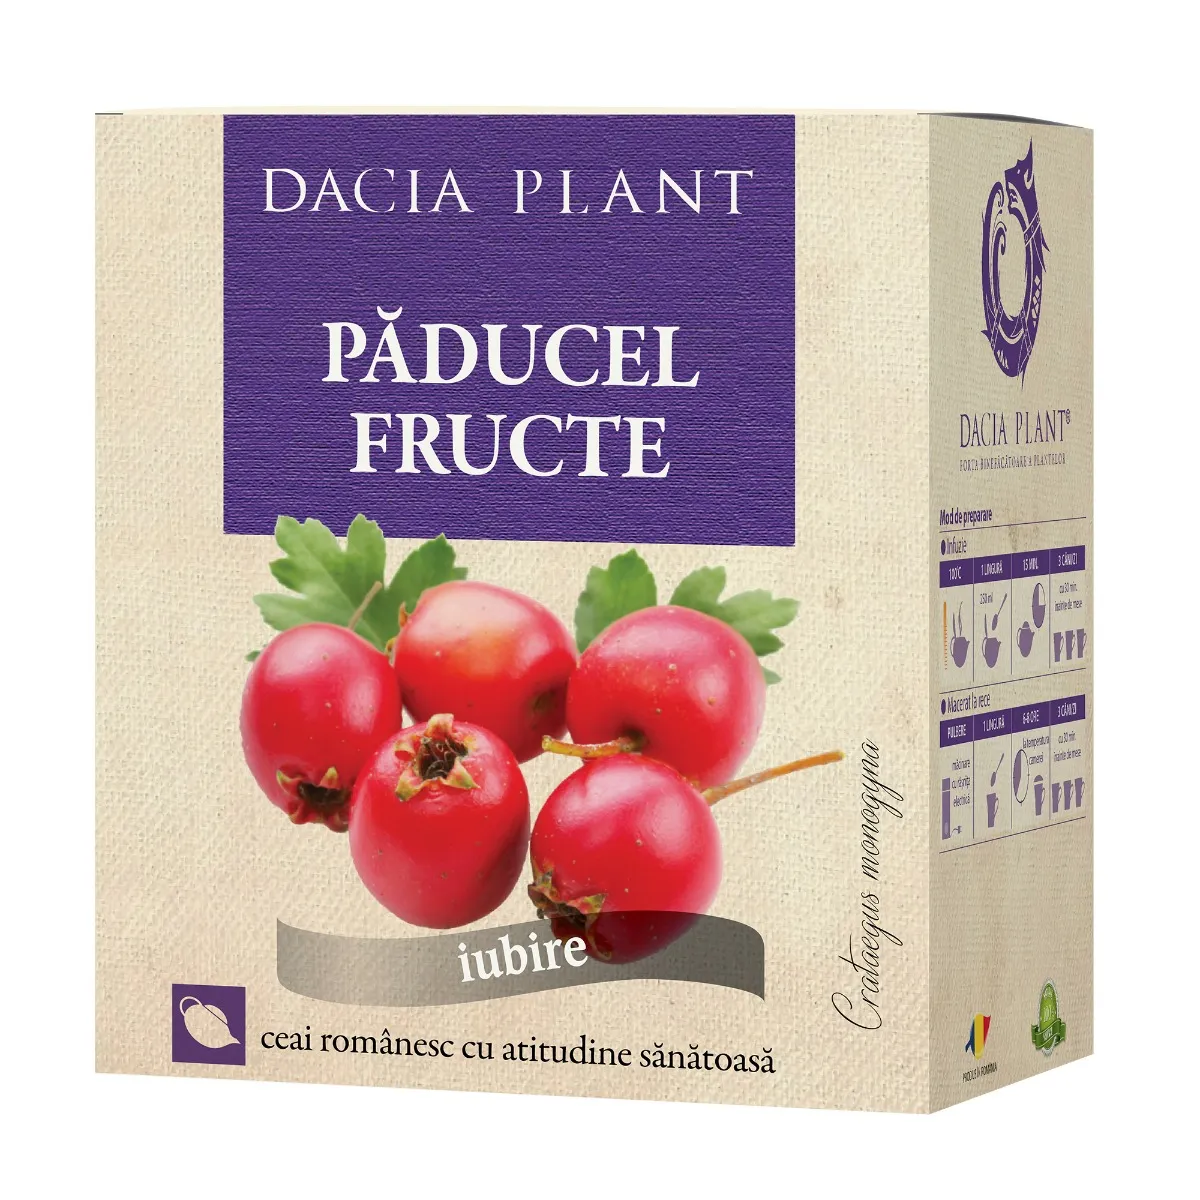 Ceai de paducel fructe, 50g, Dacia Plant